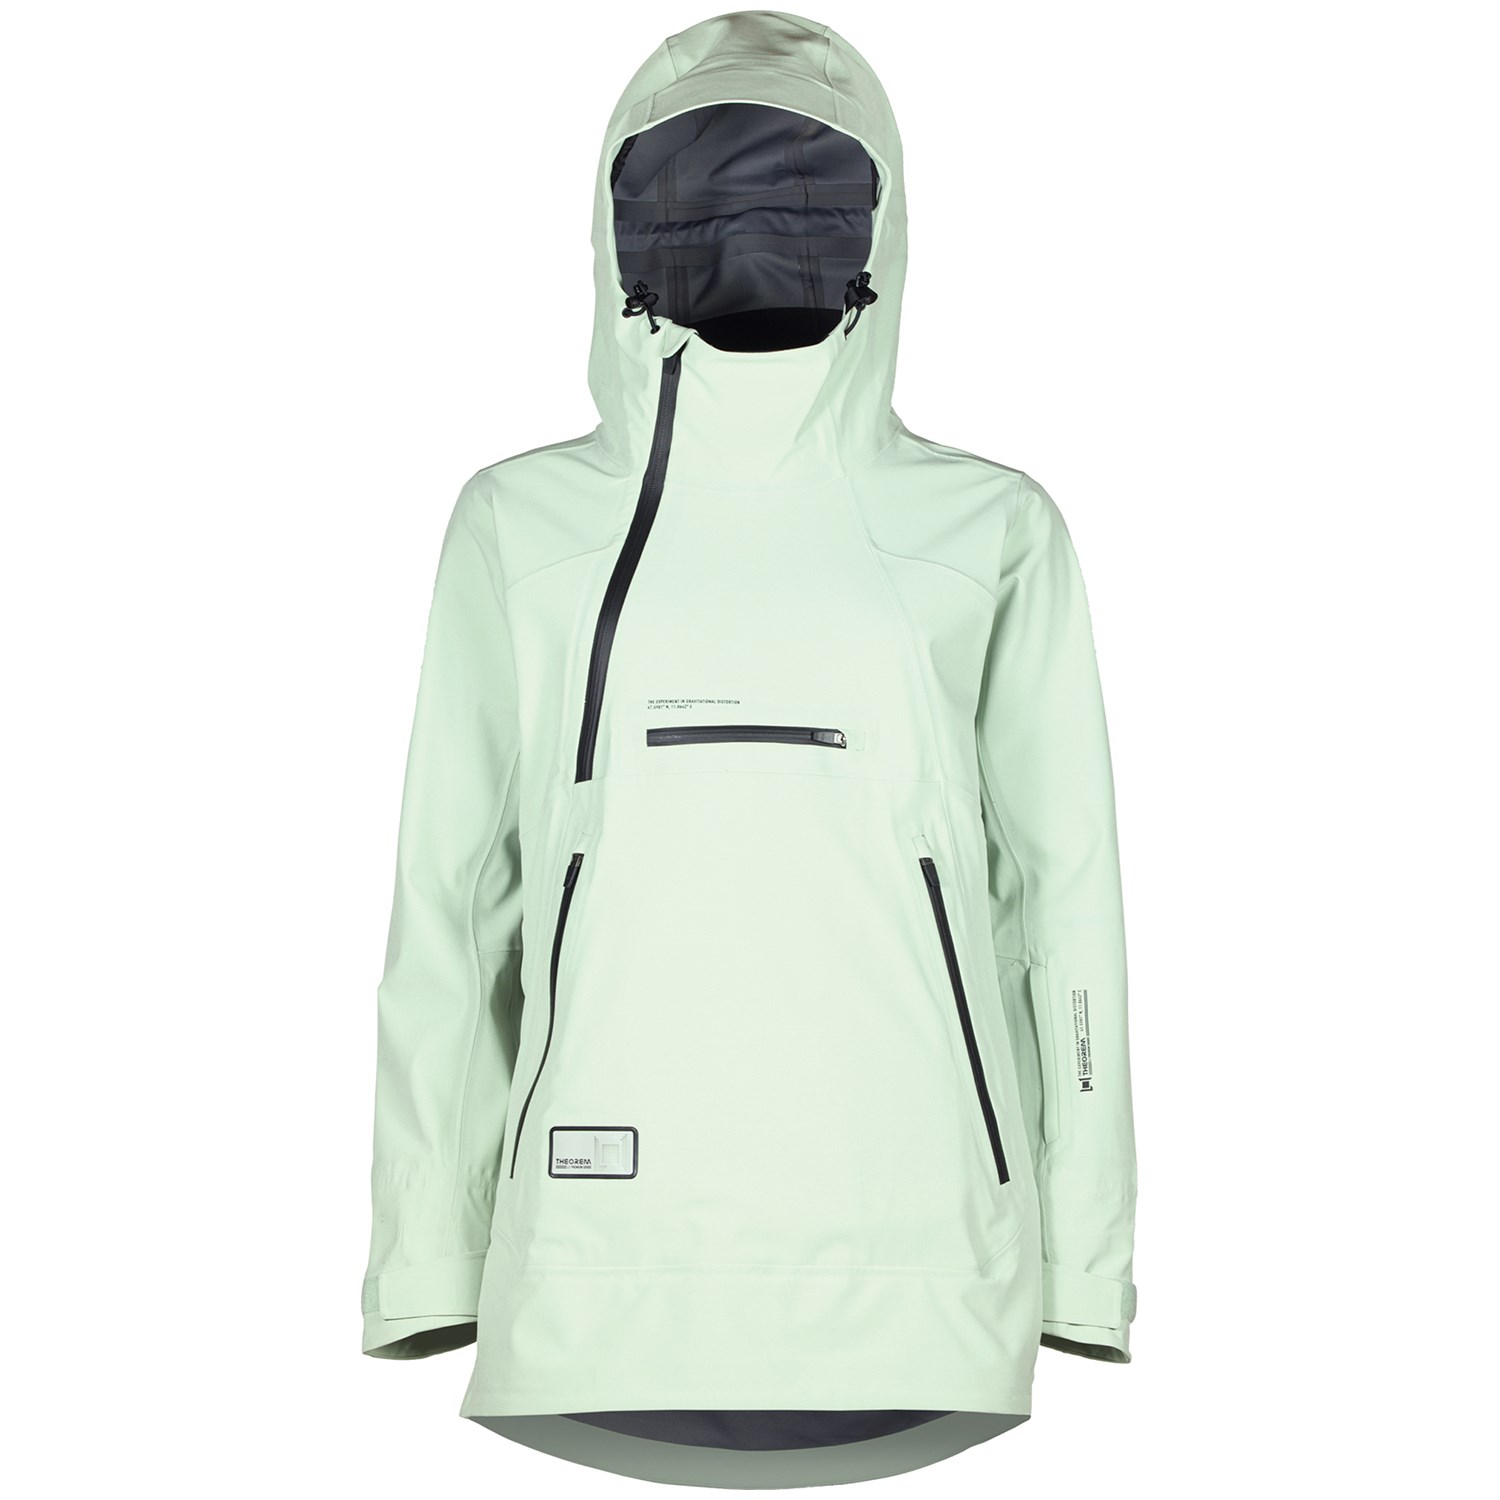 Куртка L1 Atlas, цвет Spray куртка l1 snowblind цвет port